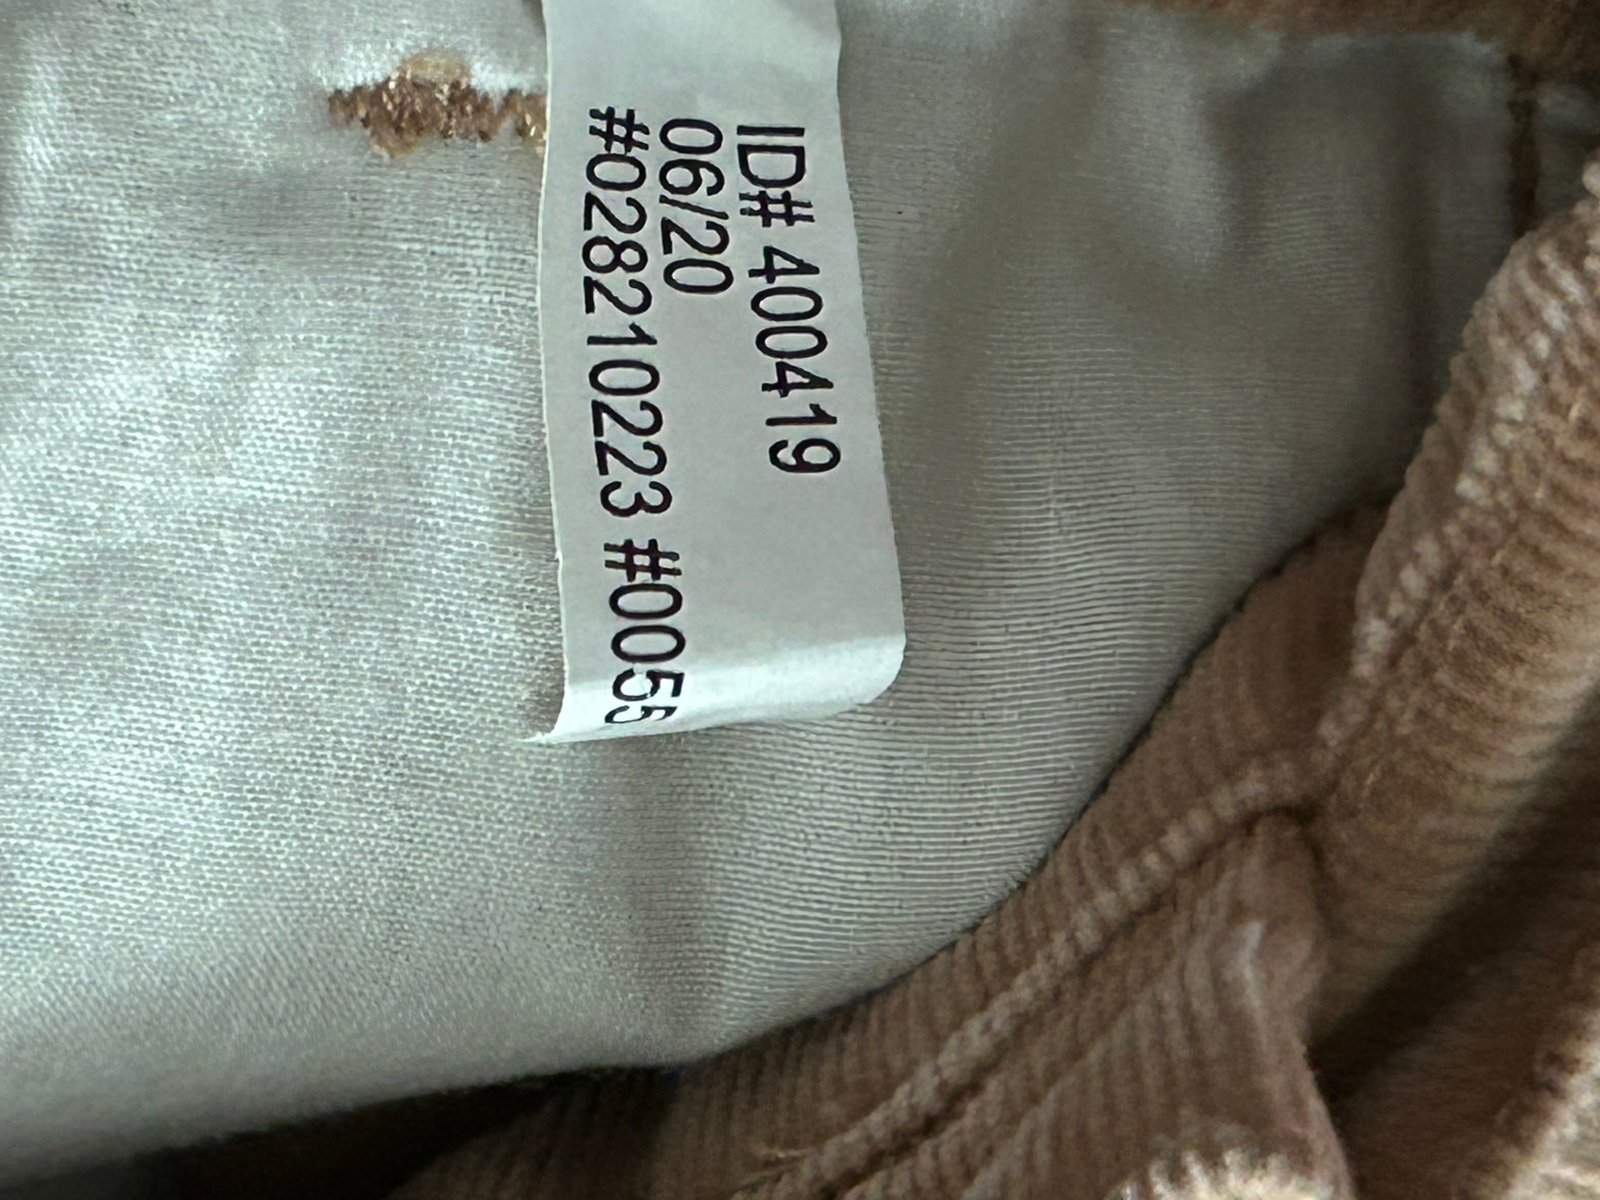 Perfect Express high rise corduroy skirt beige size 14 belt gathered waist EUC pjcAY7PVx US Sale